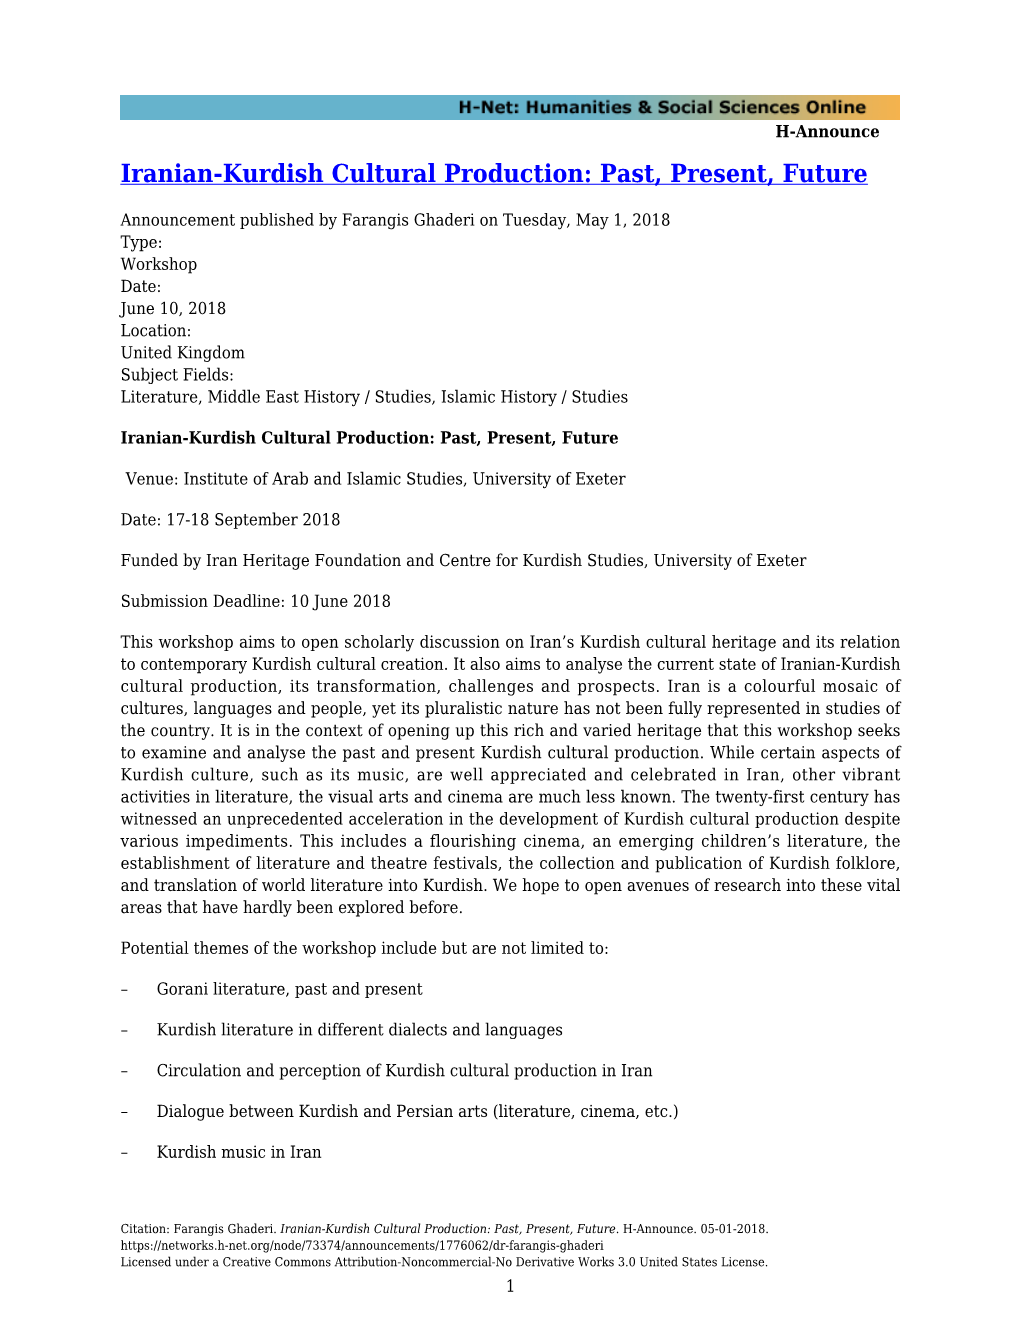 Iranian-Kurdish Cultural Production: Past, Present, Future